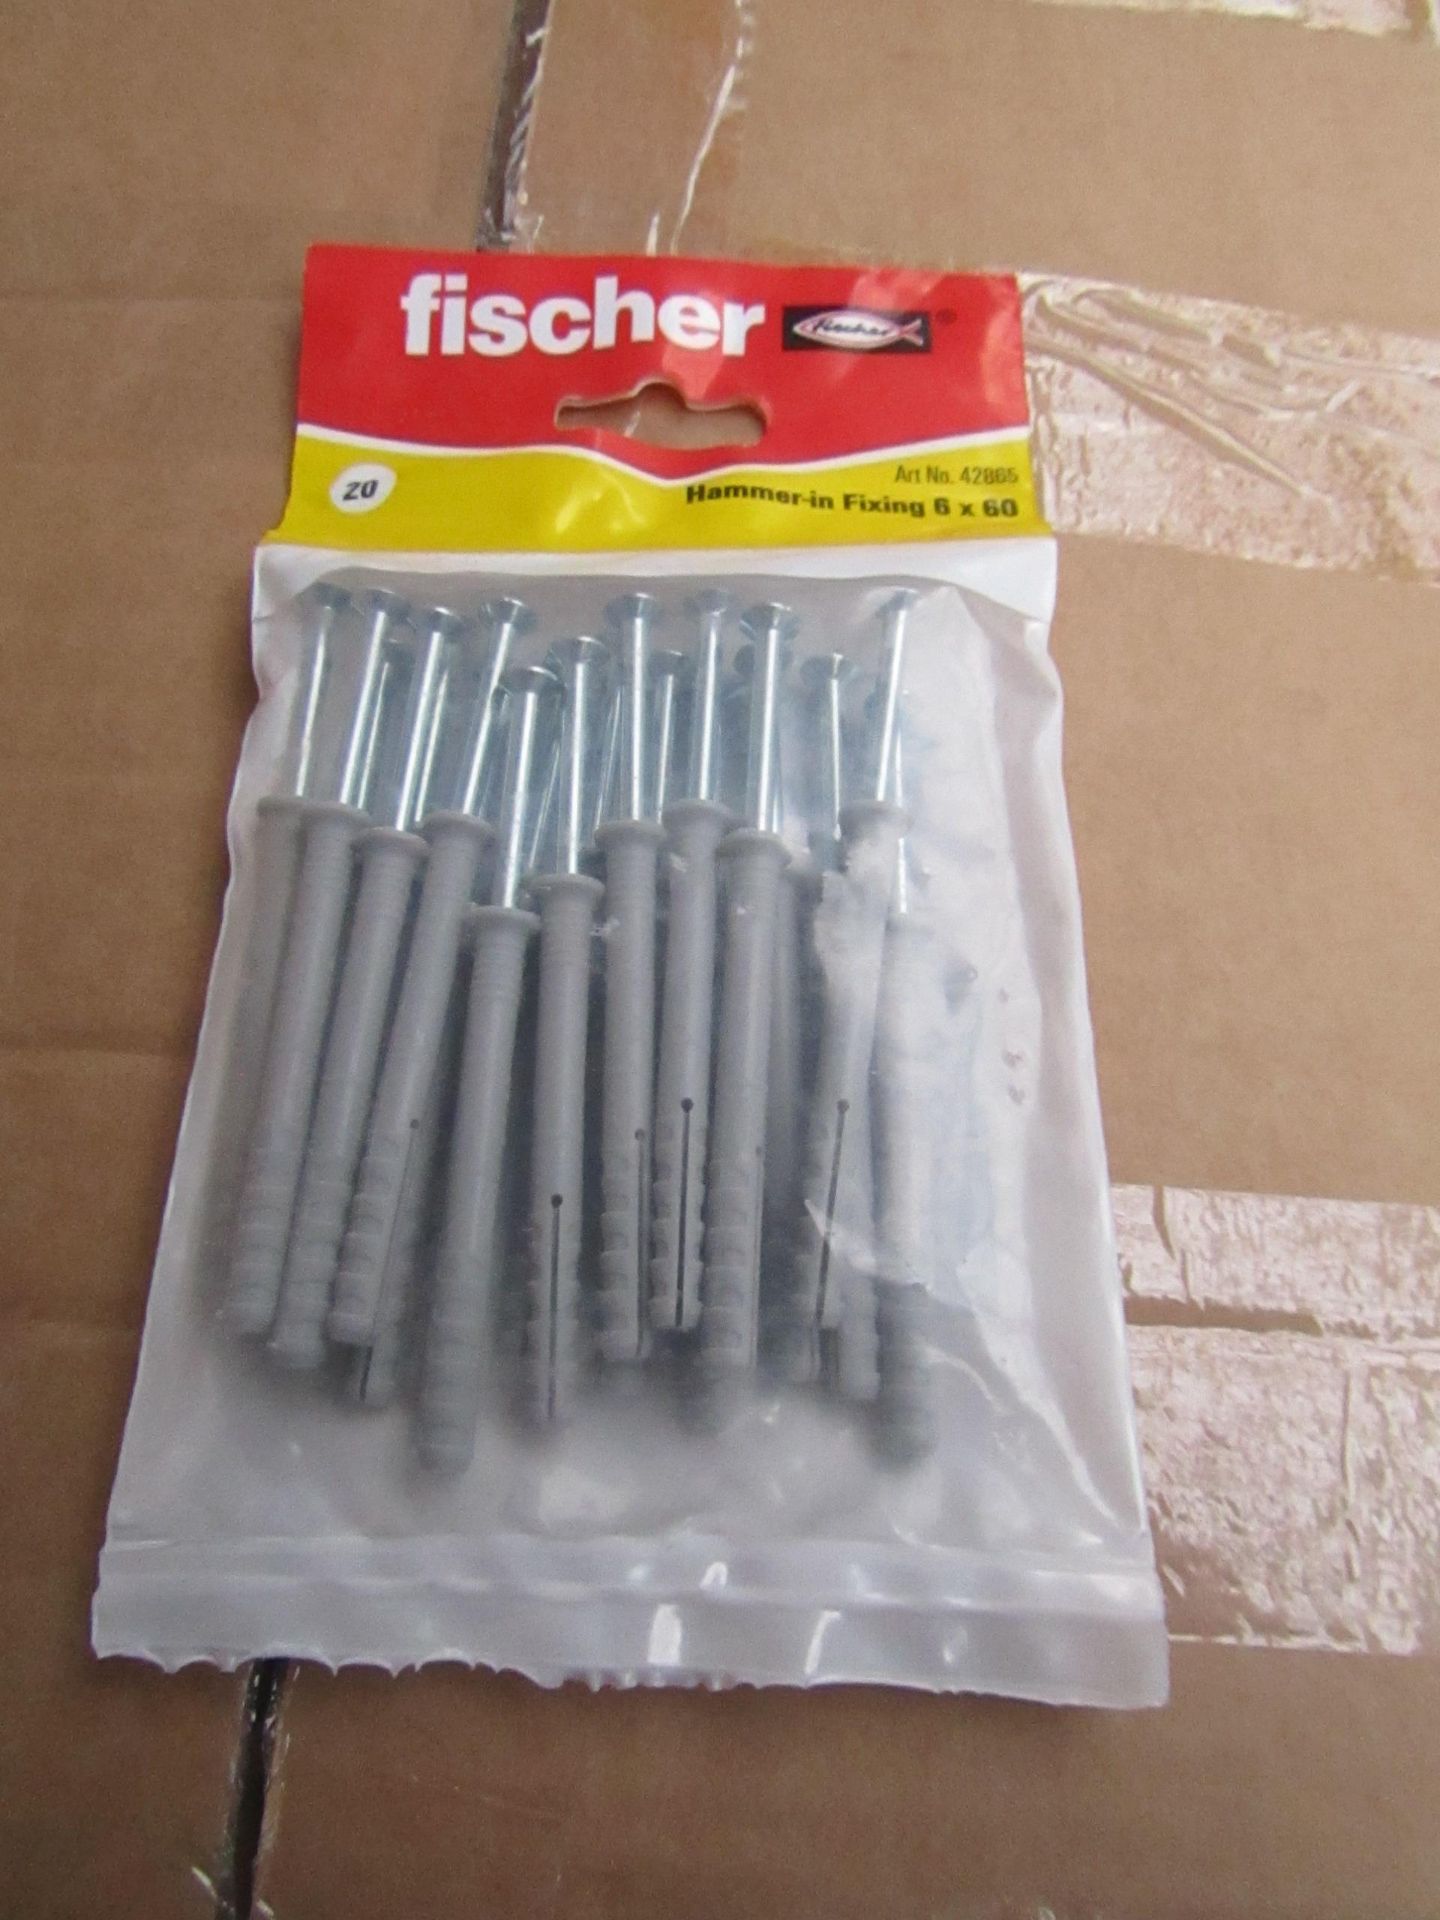 5 x Fischer Hammer in Fixing 6 x 60, 20 per pack New In Packaging